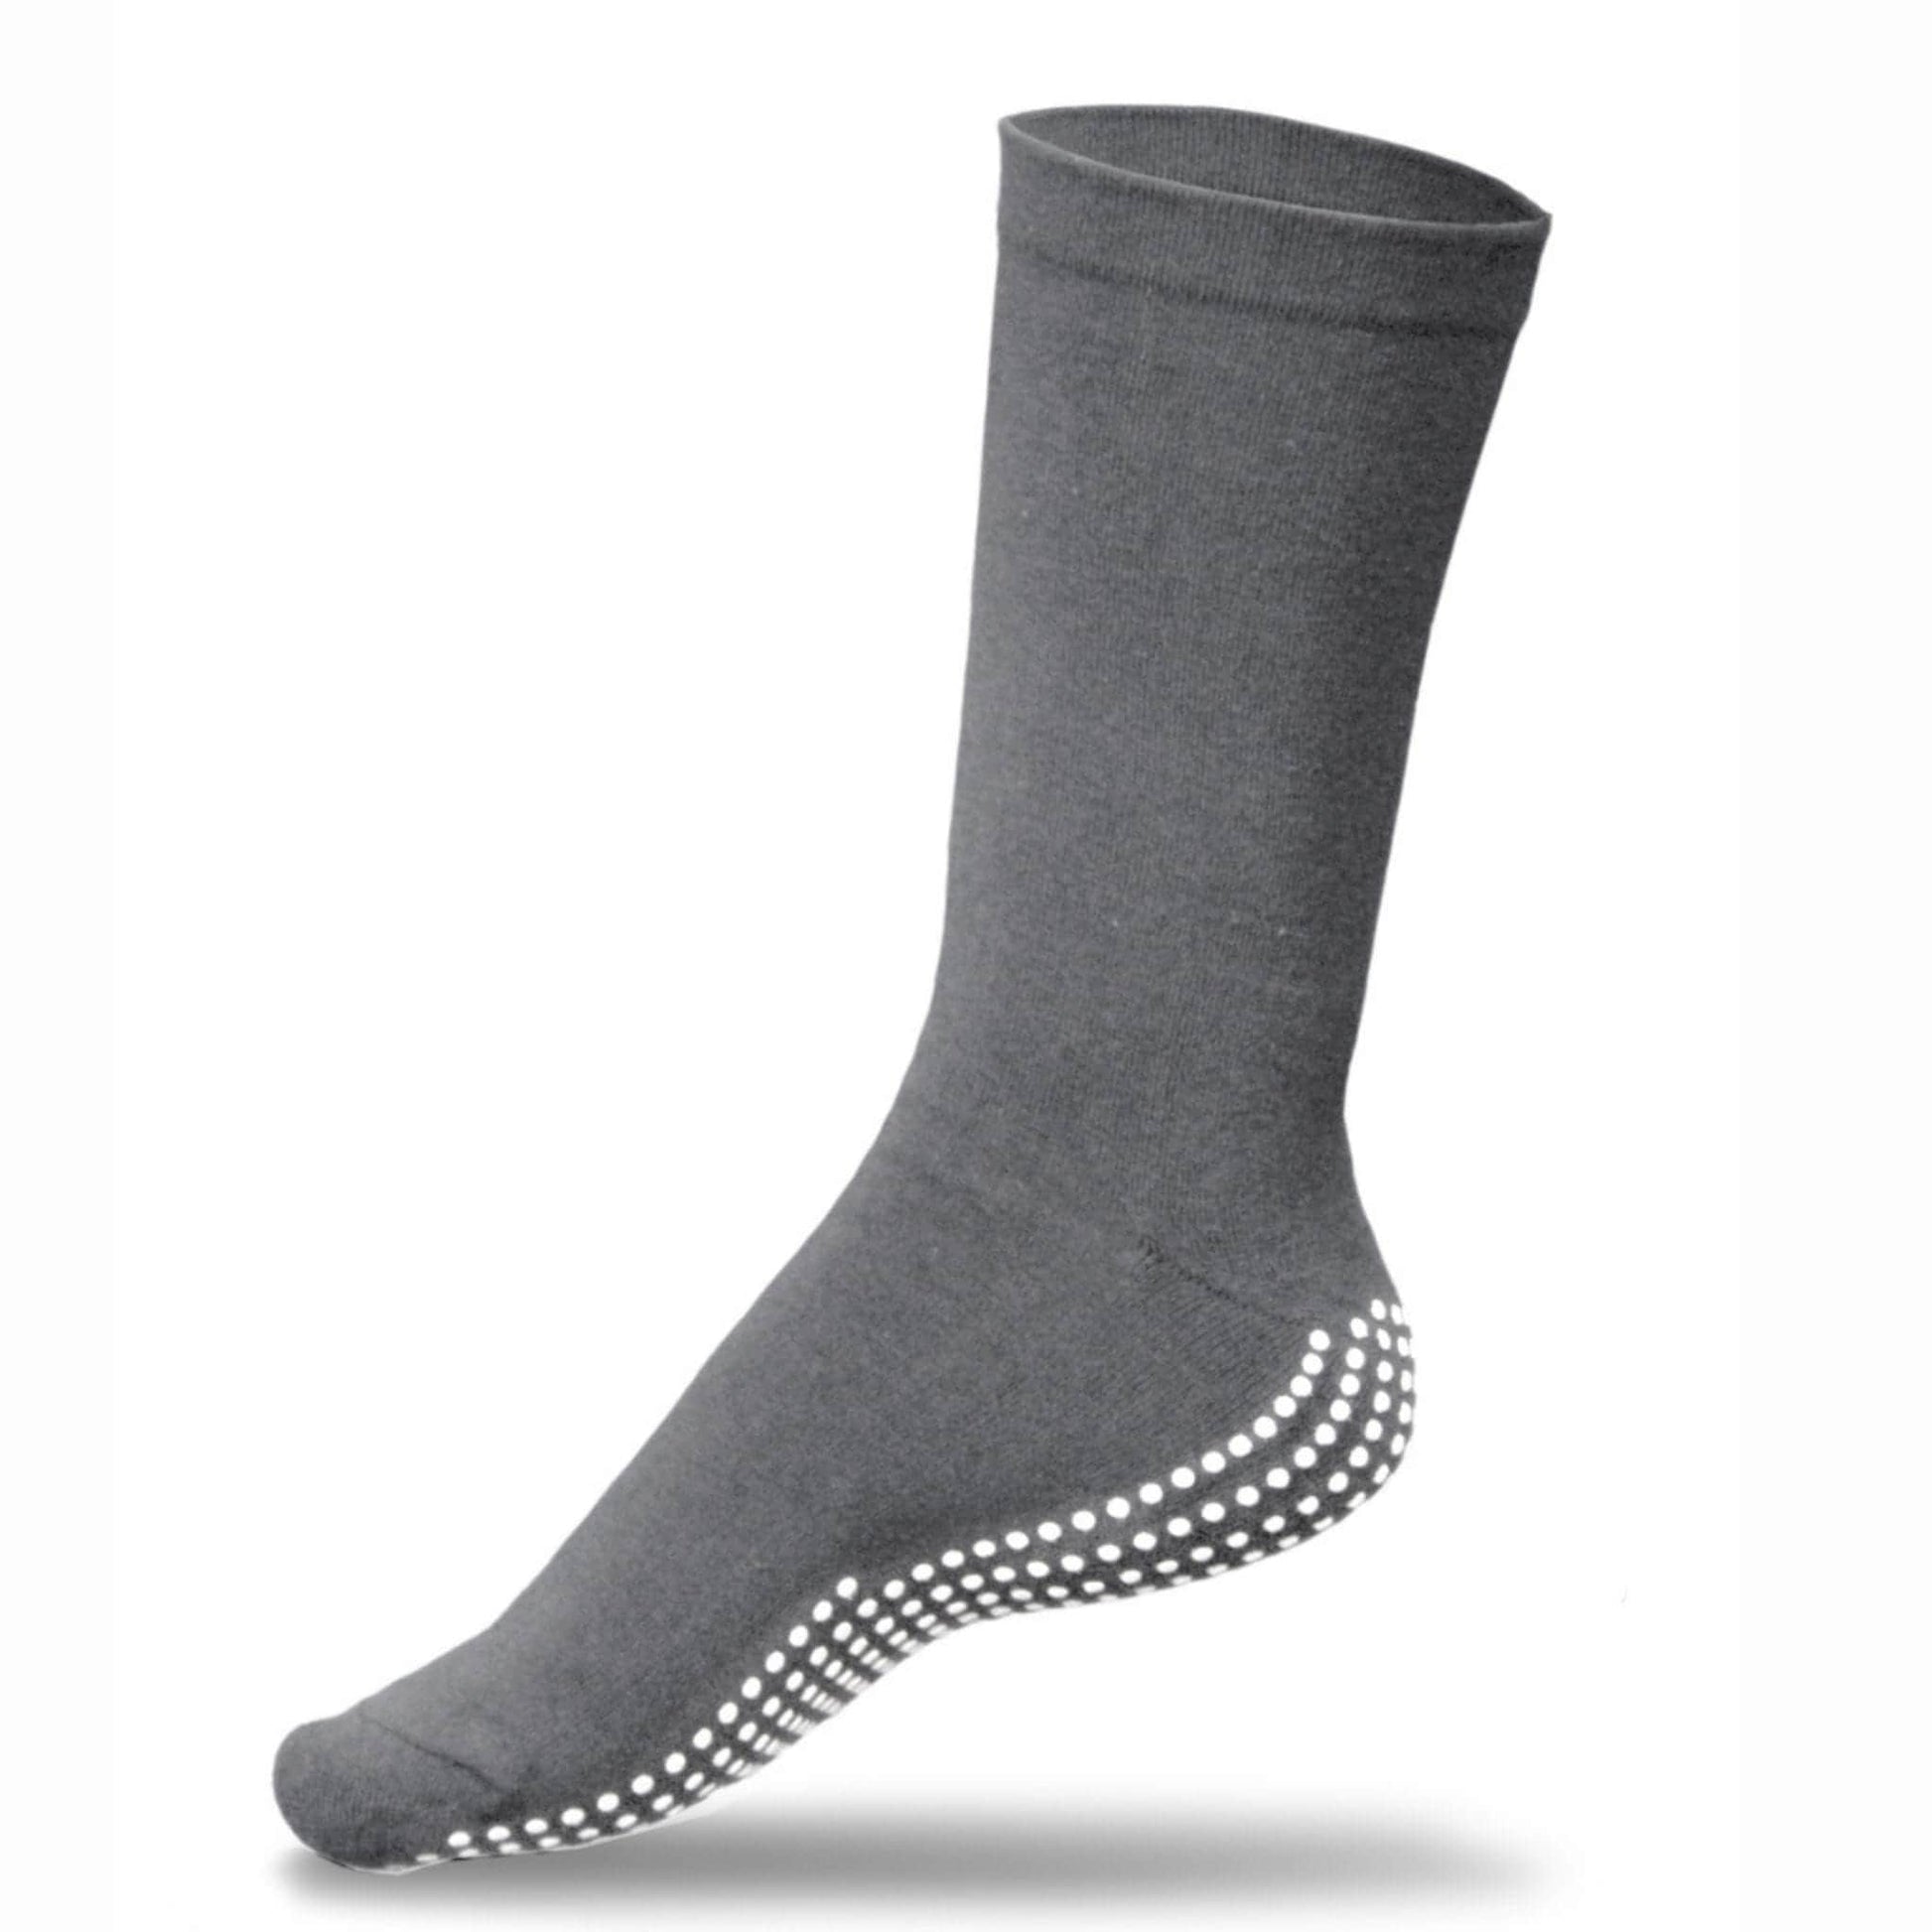 Gripperz Kids/ Adults Grip Socks - Non Slip Circulation Socks - Caring Clothing